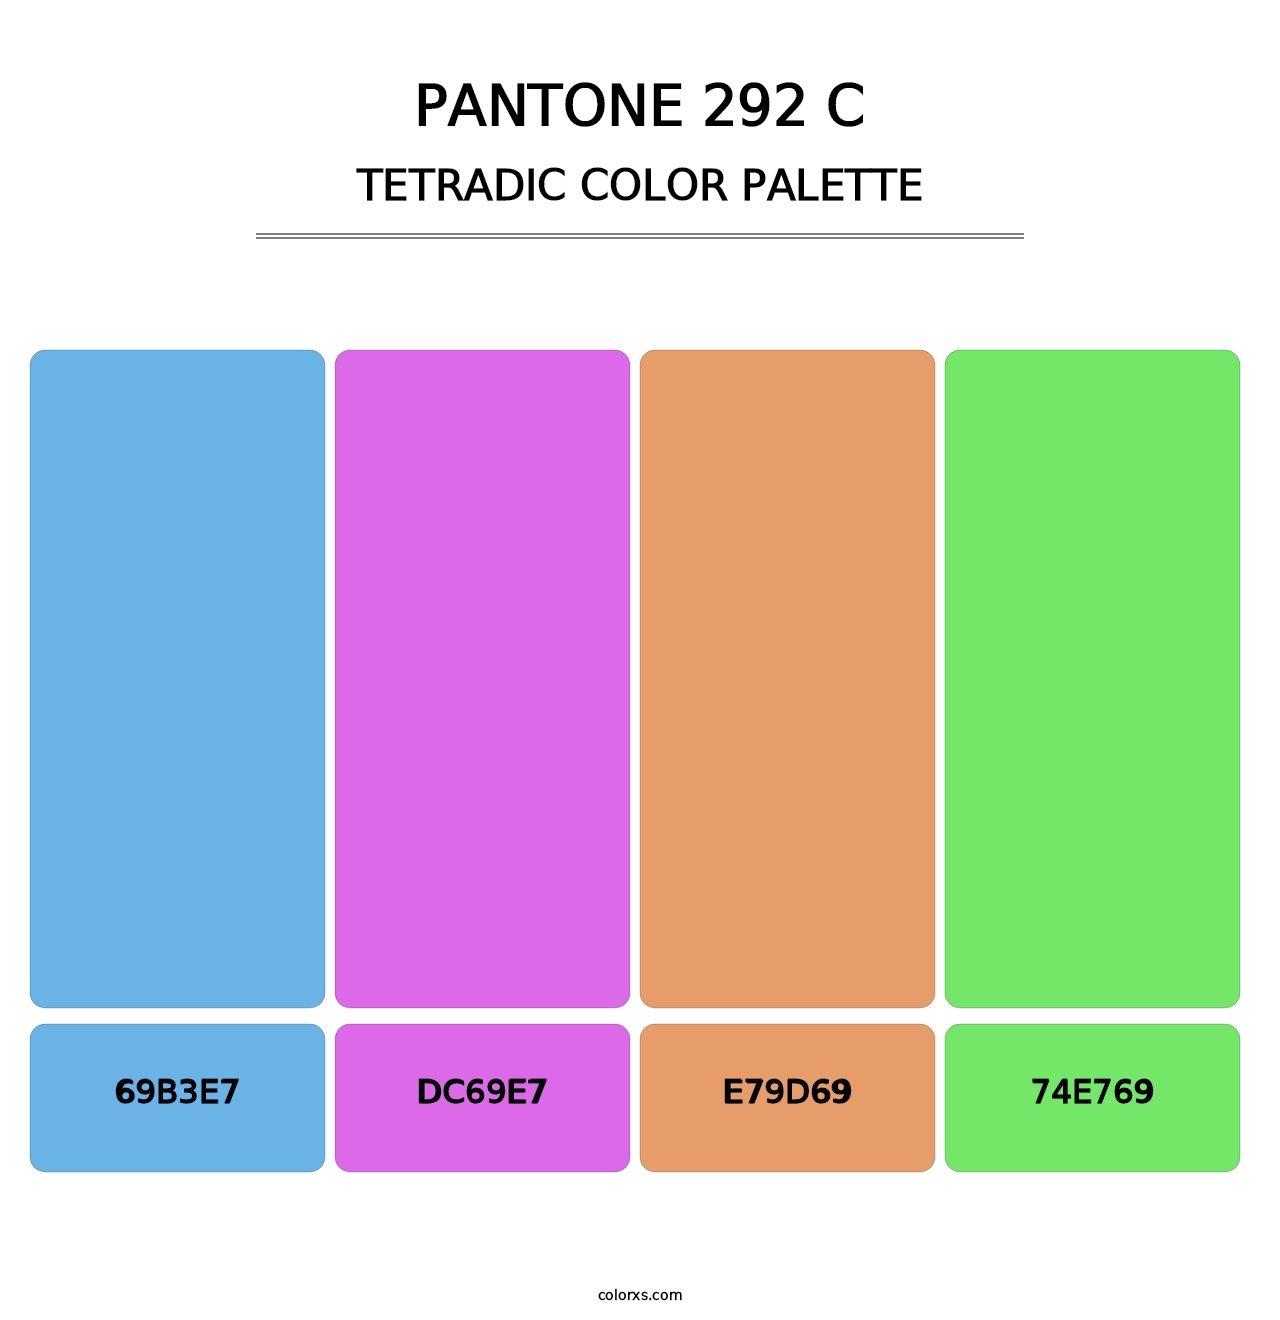 PANTONE 292 C - Tetradic Color Palette